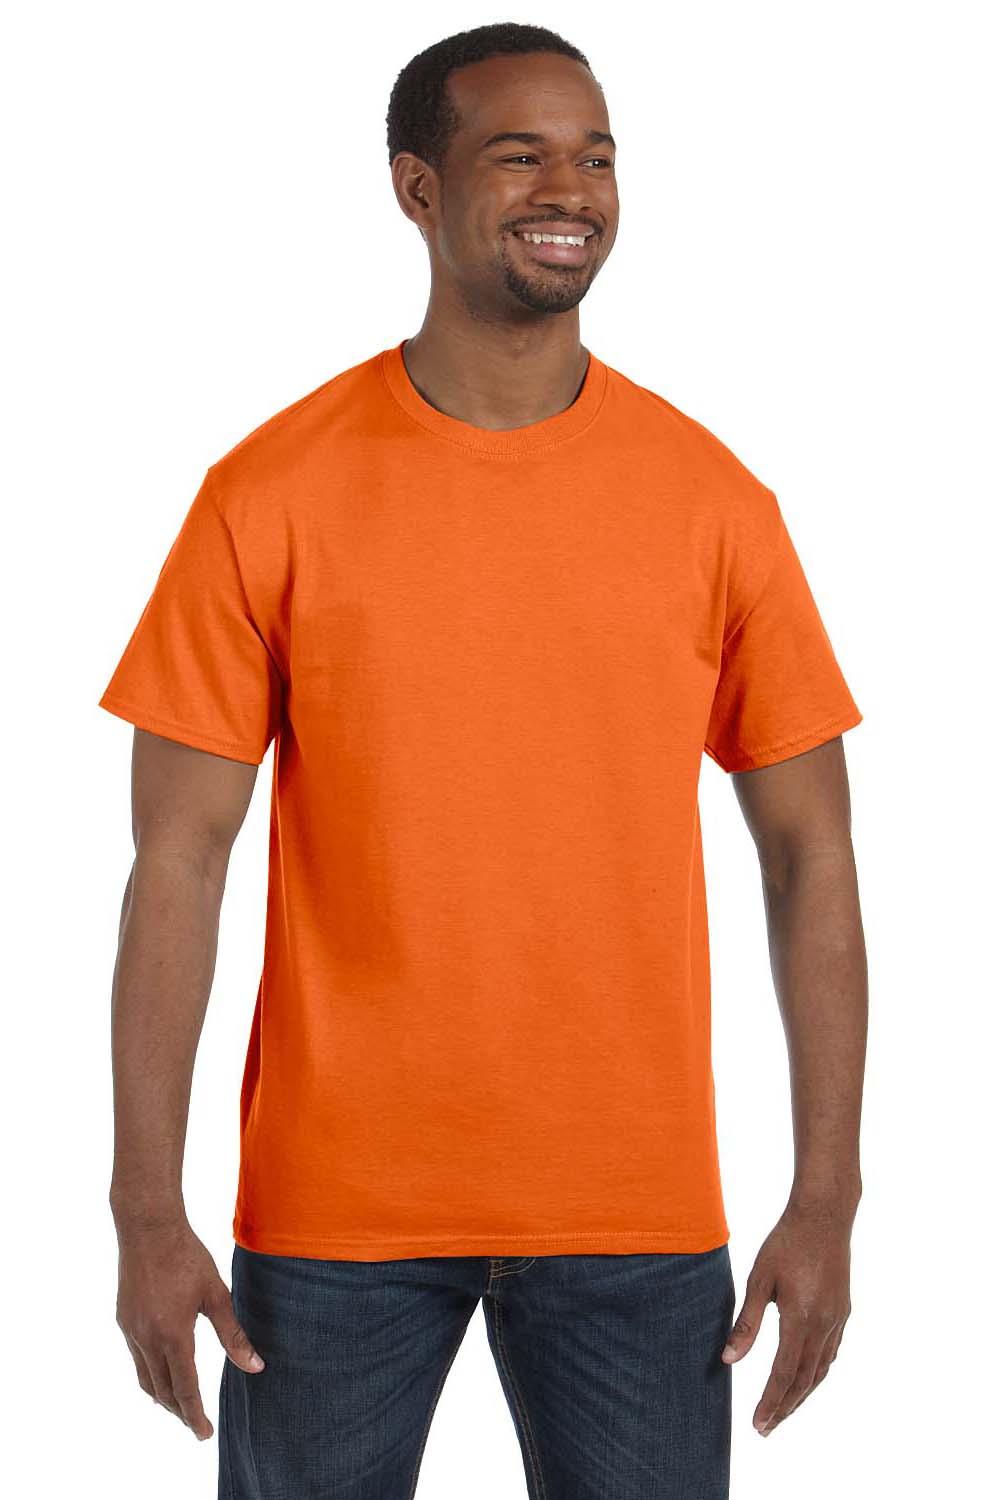 Hanes 5250T Mens ComfortSoft Short Sleeve Crewneck T-Shirt Orange Front